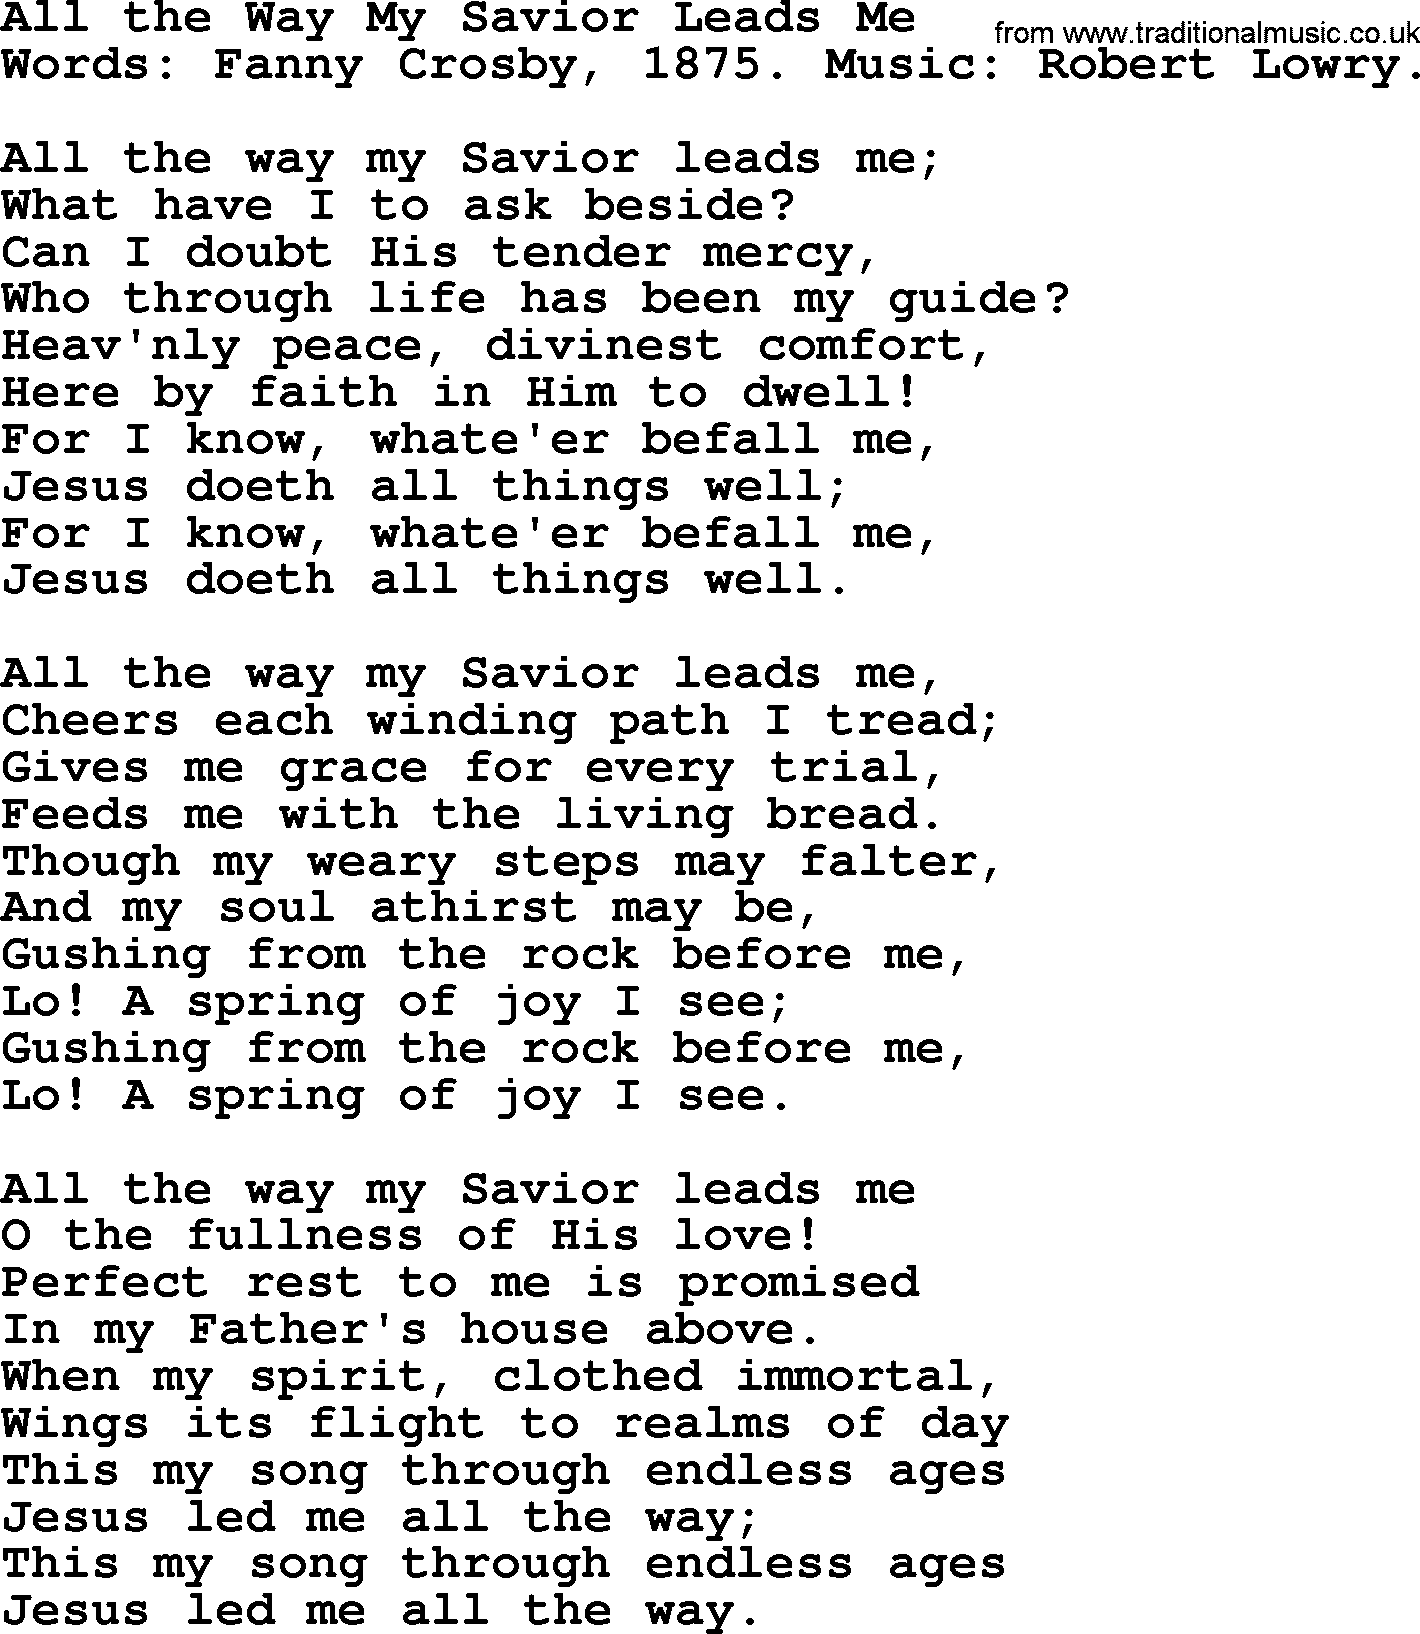 Fanny Crosby song: All The Way My Savior Leads Me, lyrics